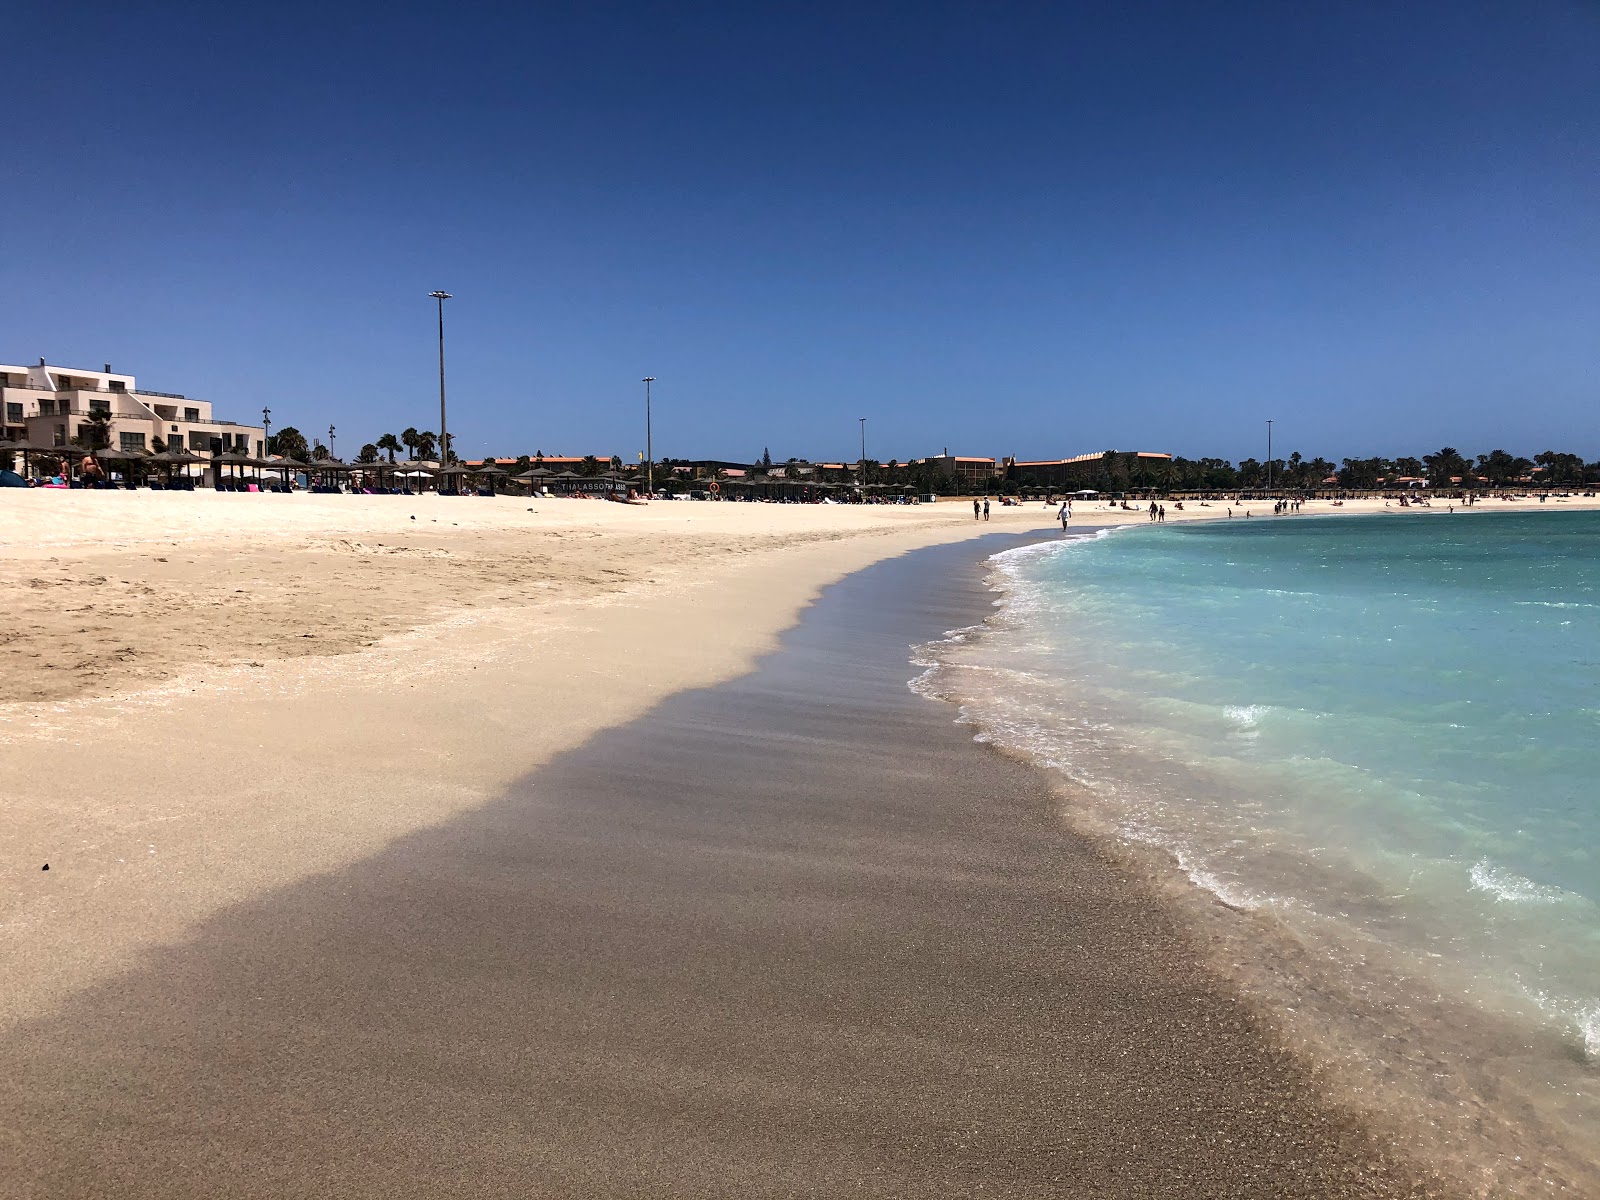 Foto di Playa del Castillo con una superficie del sabbia luminosa